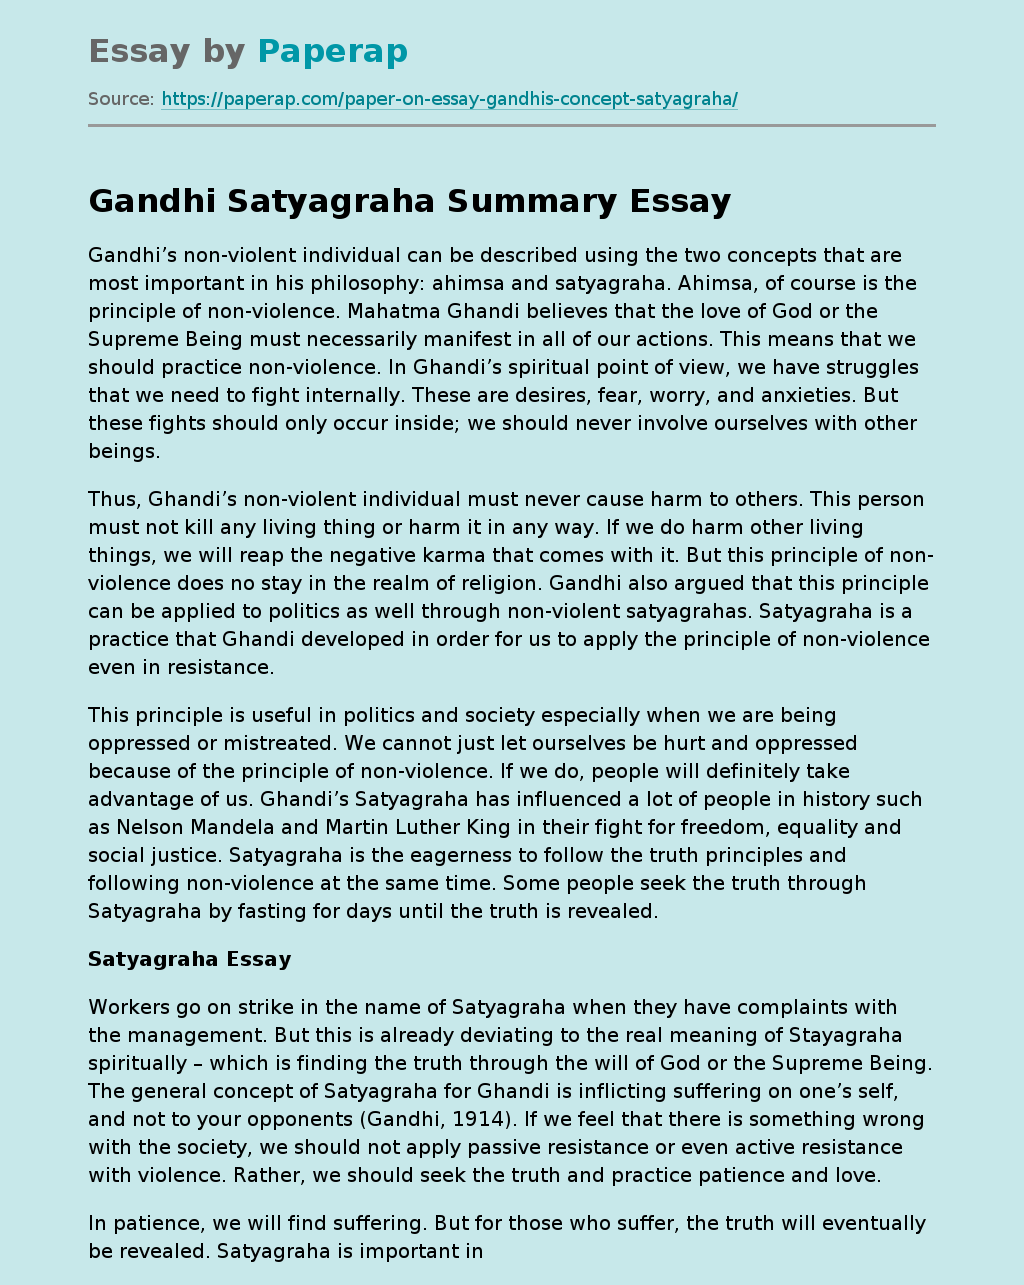 write an essay on gandhiji satyagraha